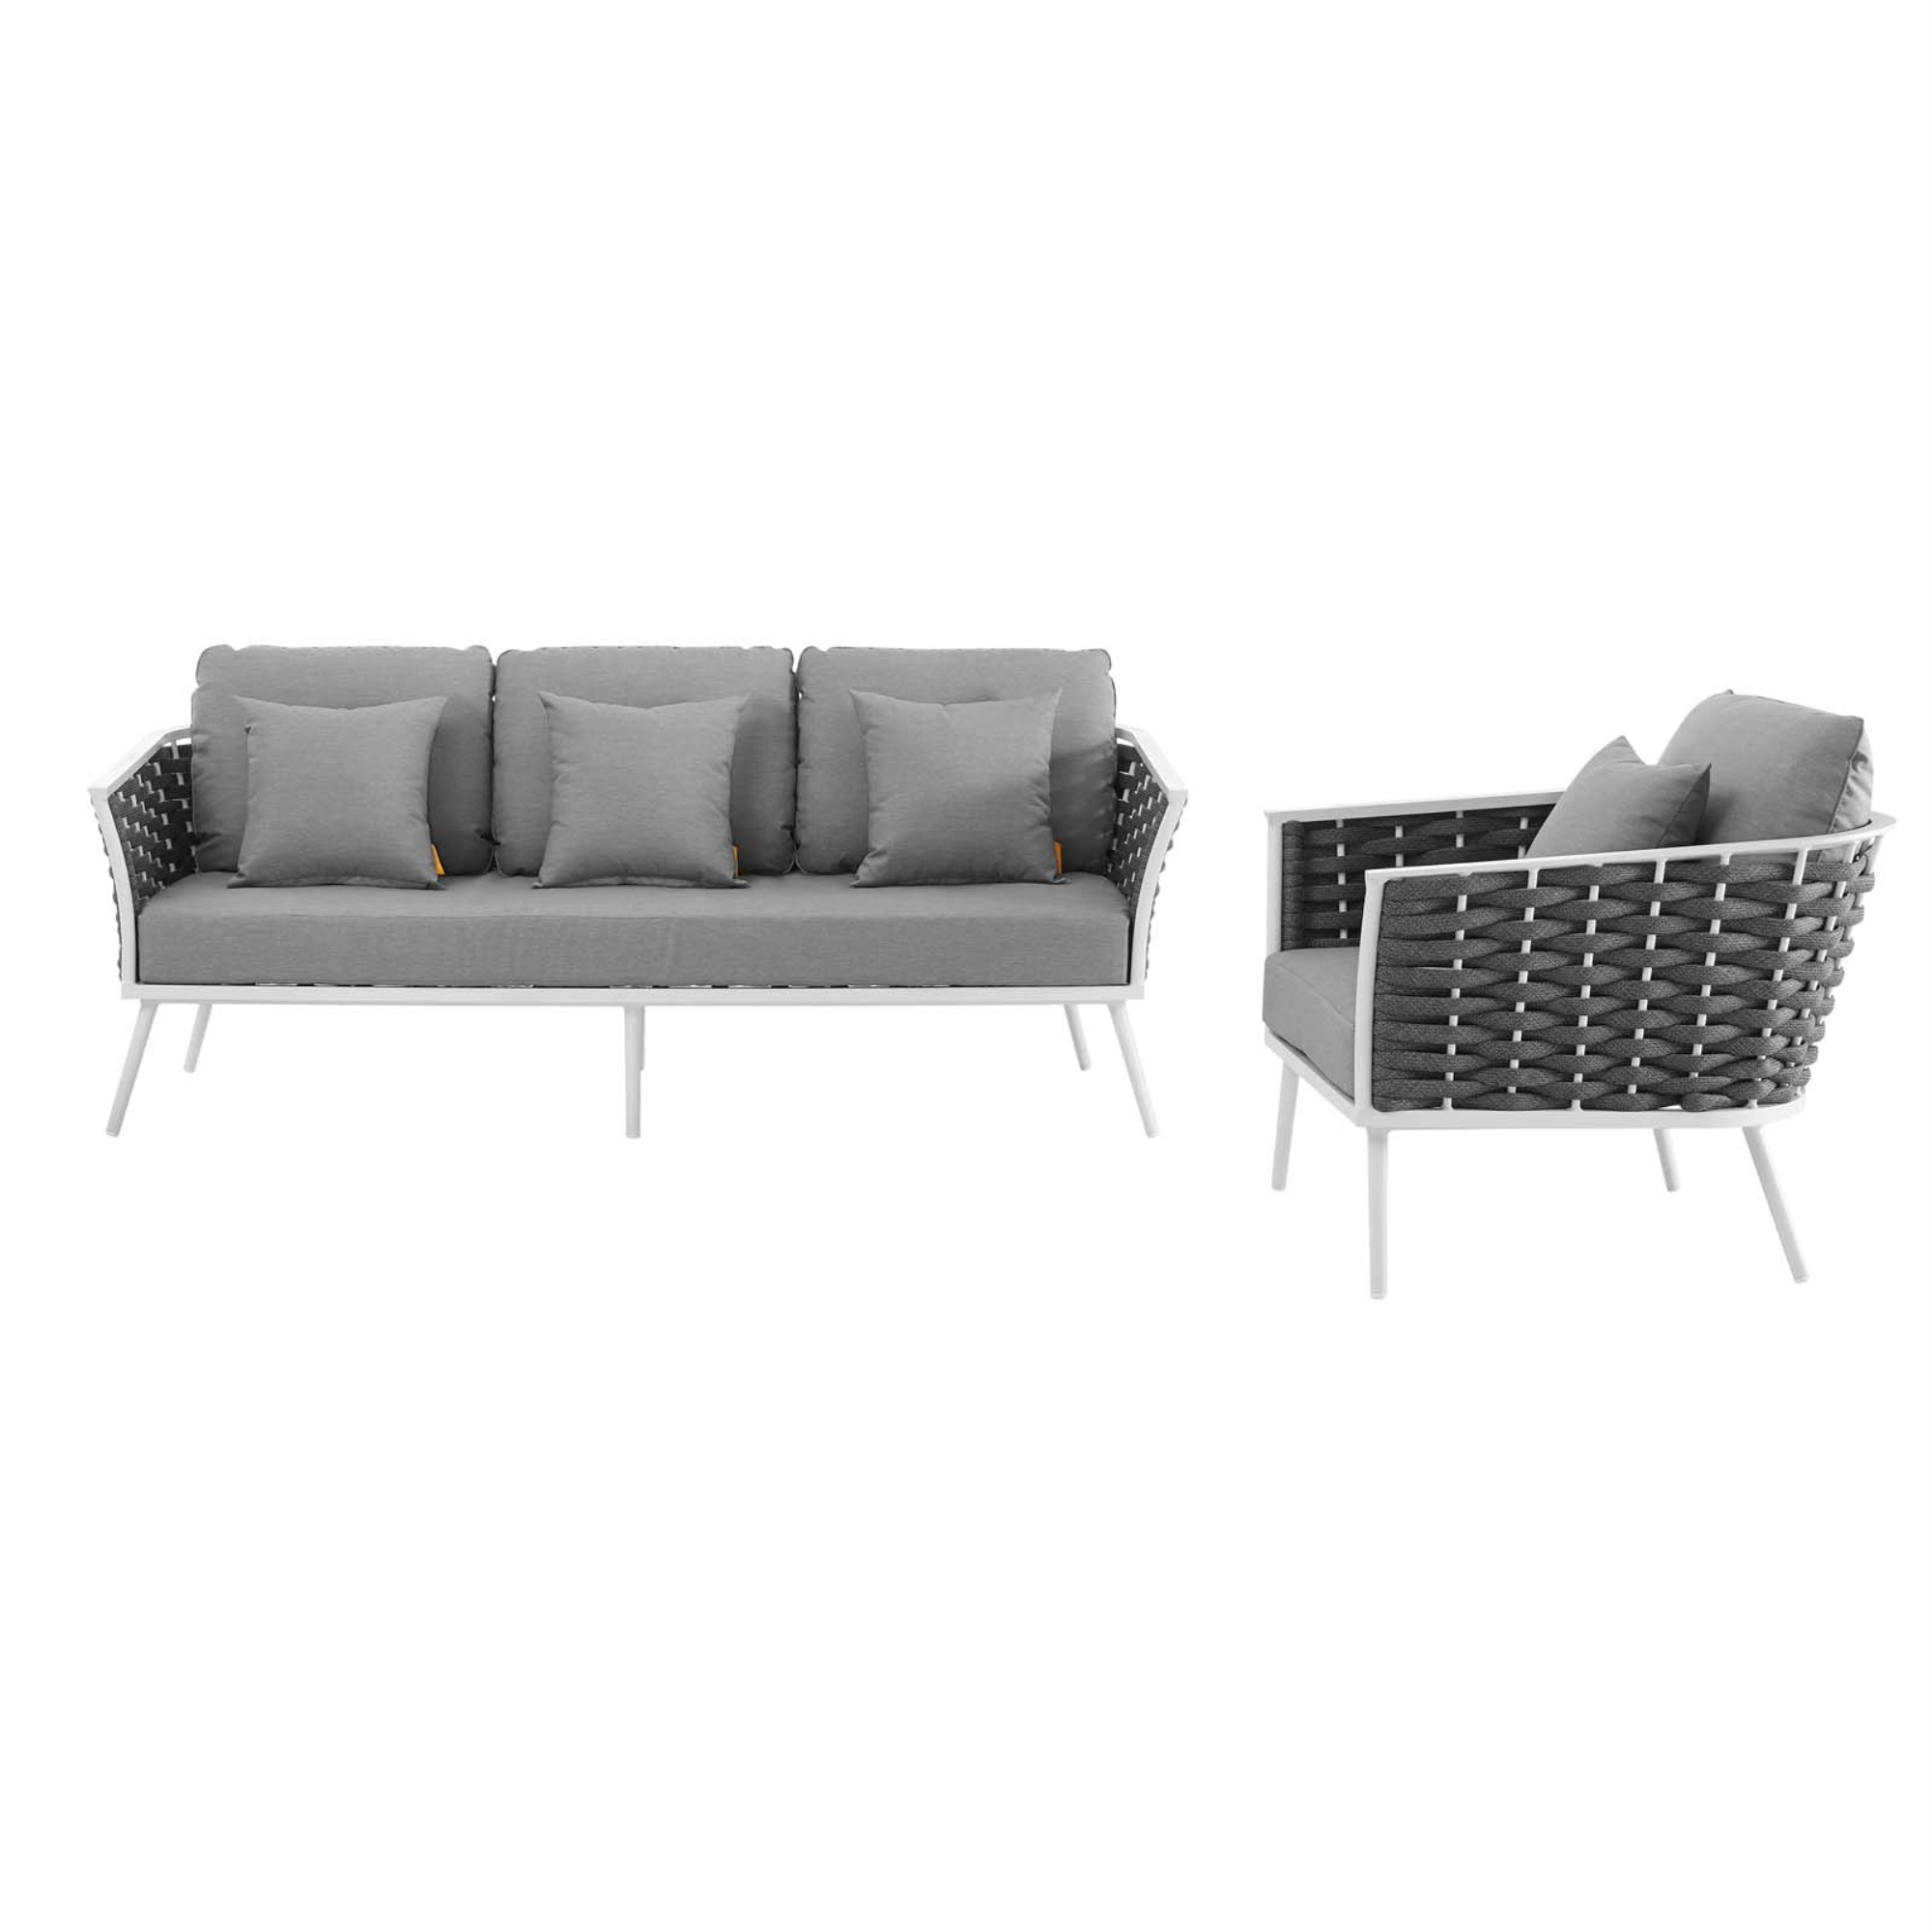 Ergode Stance 2 Piece Outdoor Patio Aluminum Sectional Sofa Set - White Gray